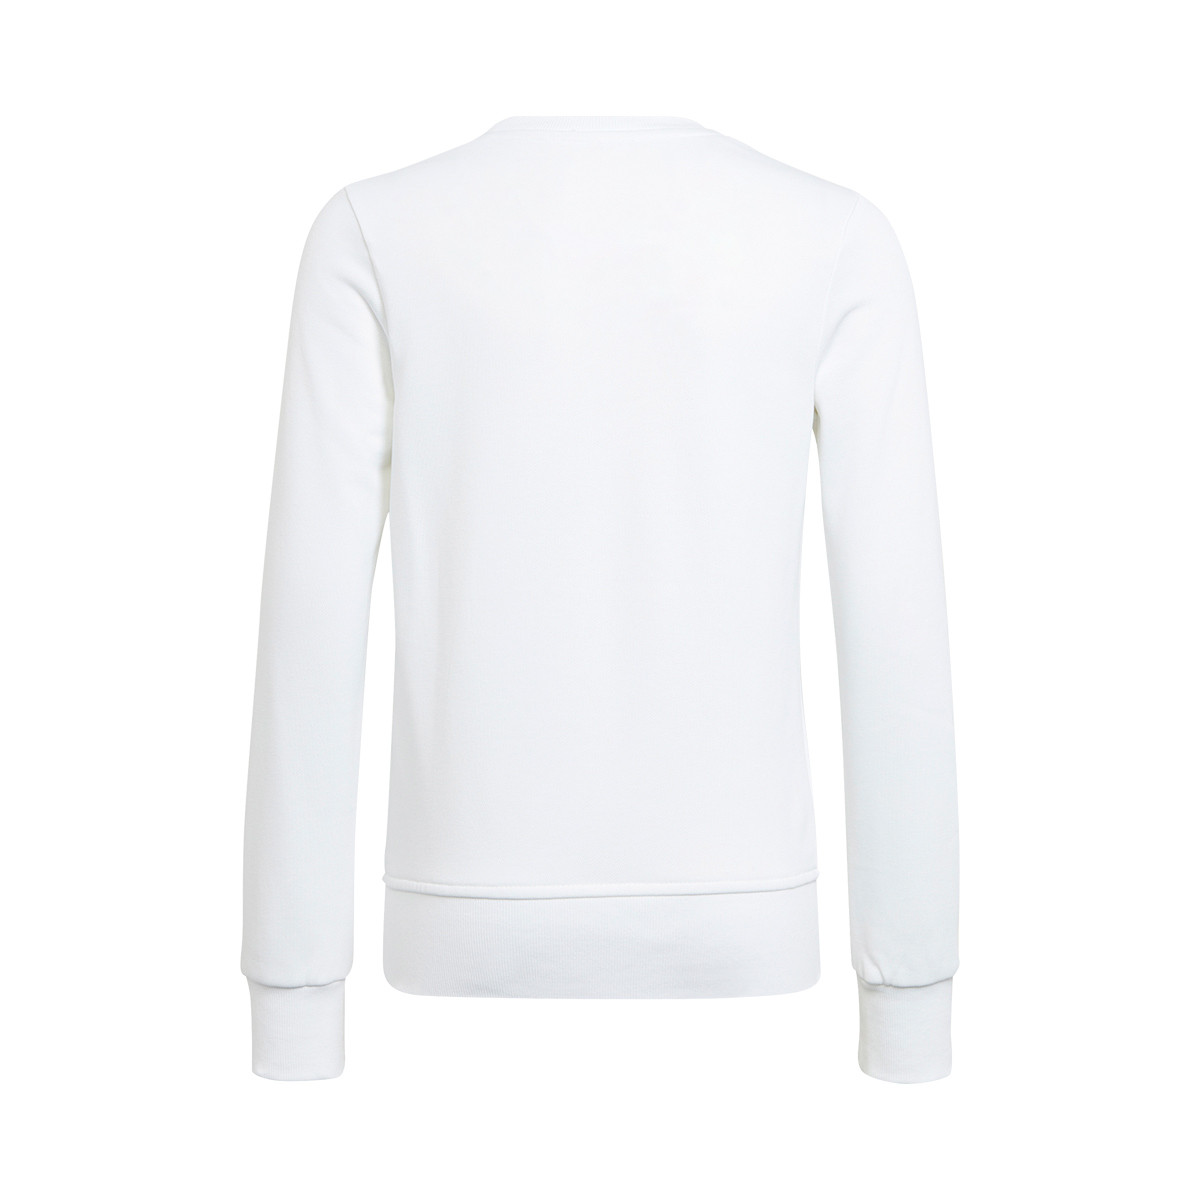 Kappa Aston Villa du personnel Sports Training Shirt Tee Top-Blanc 